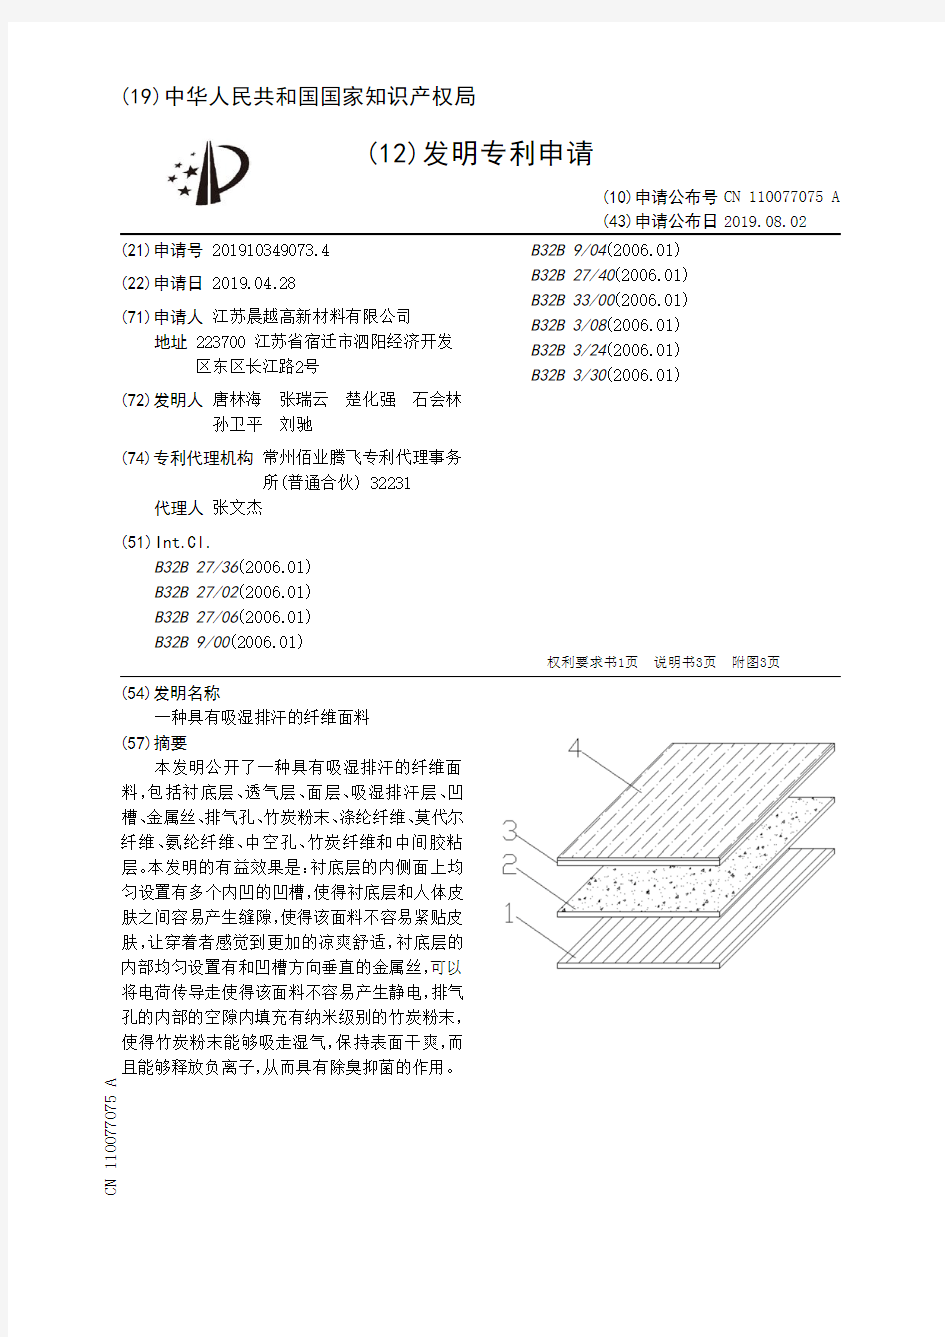 【CN110077075A】一种具有吸湿排汗的纤维面料【专利】